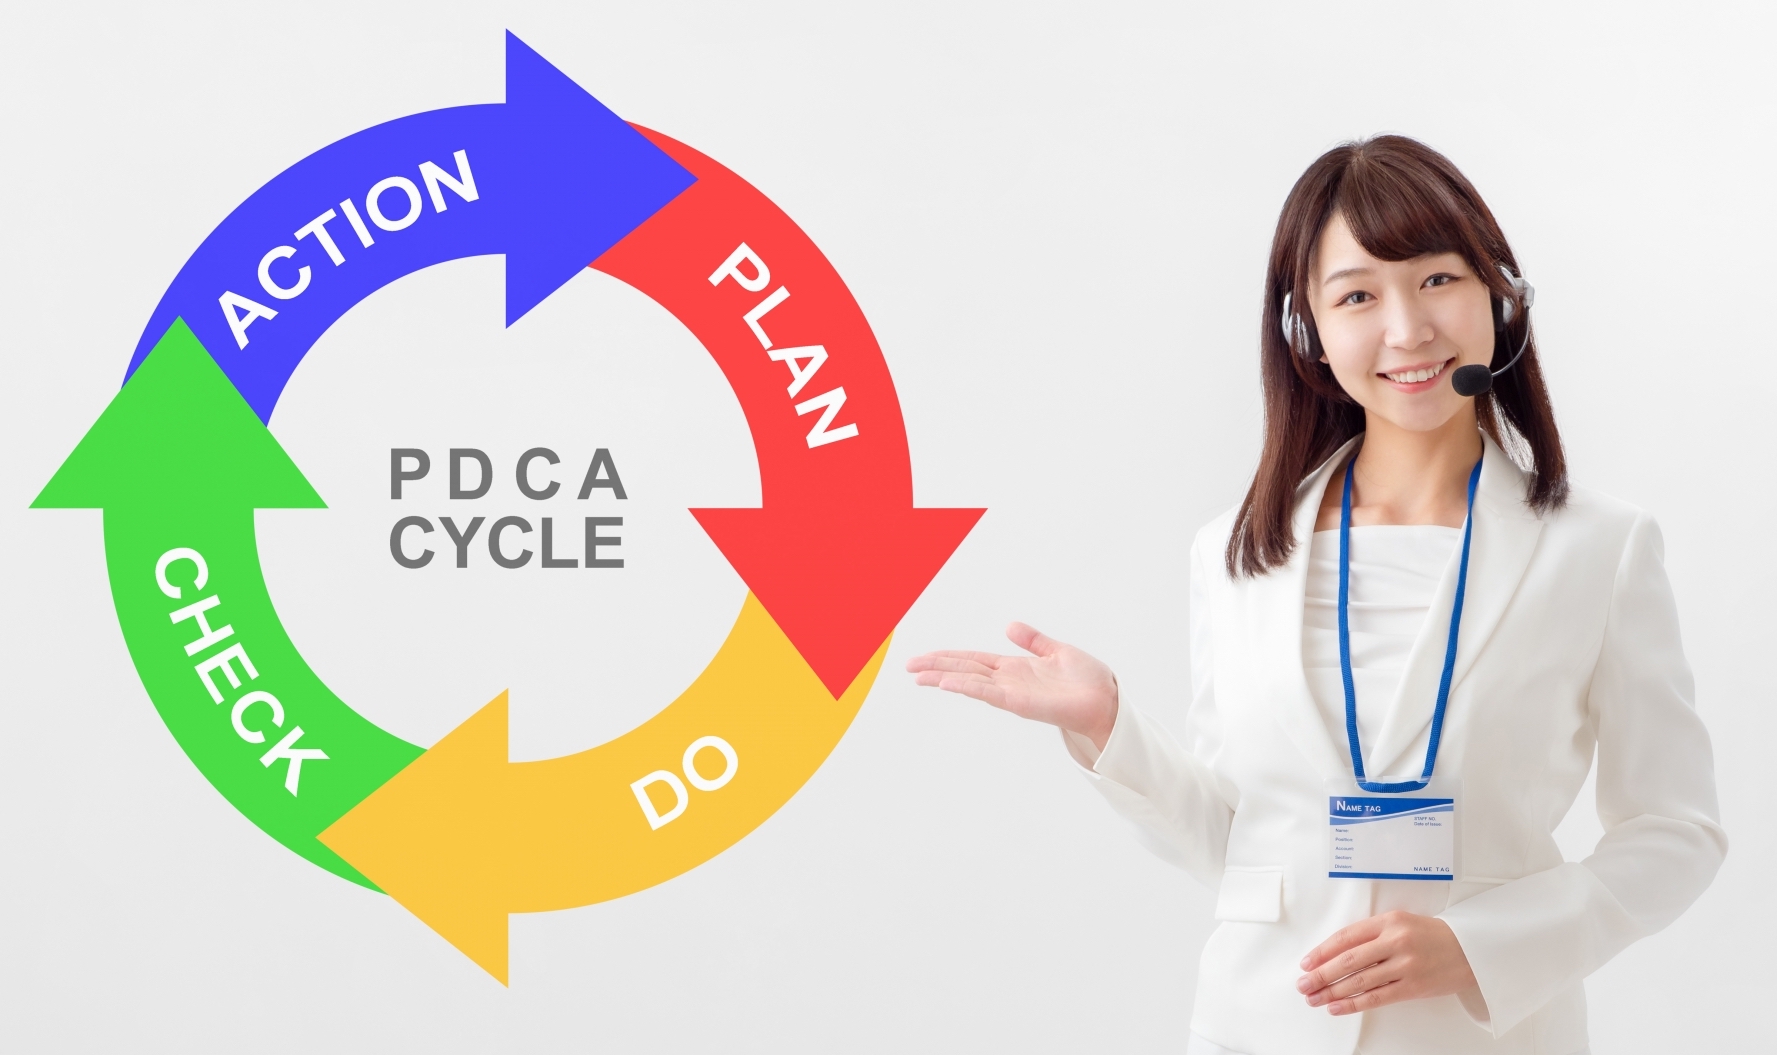 PDCAの各要素を説明している画像